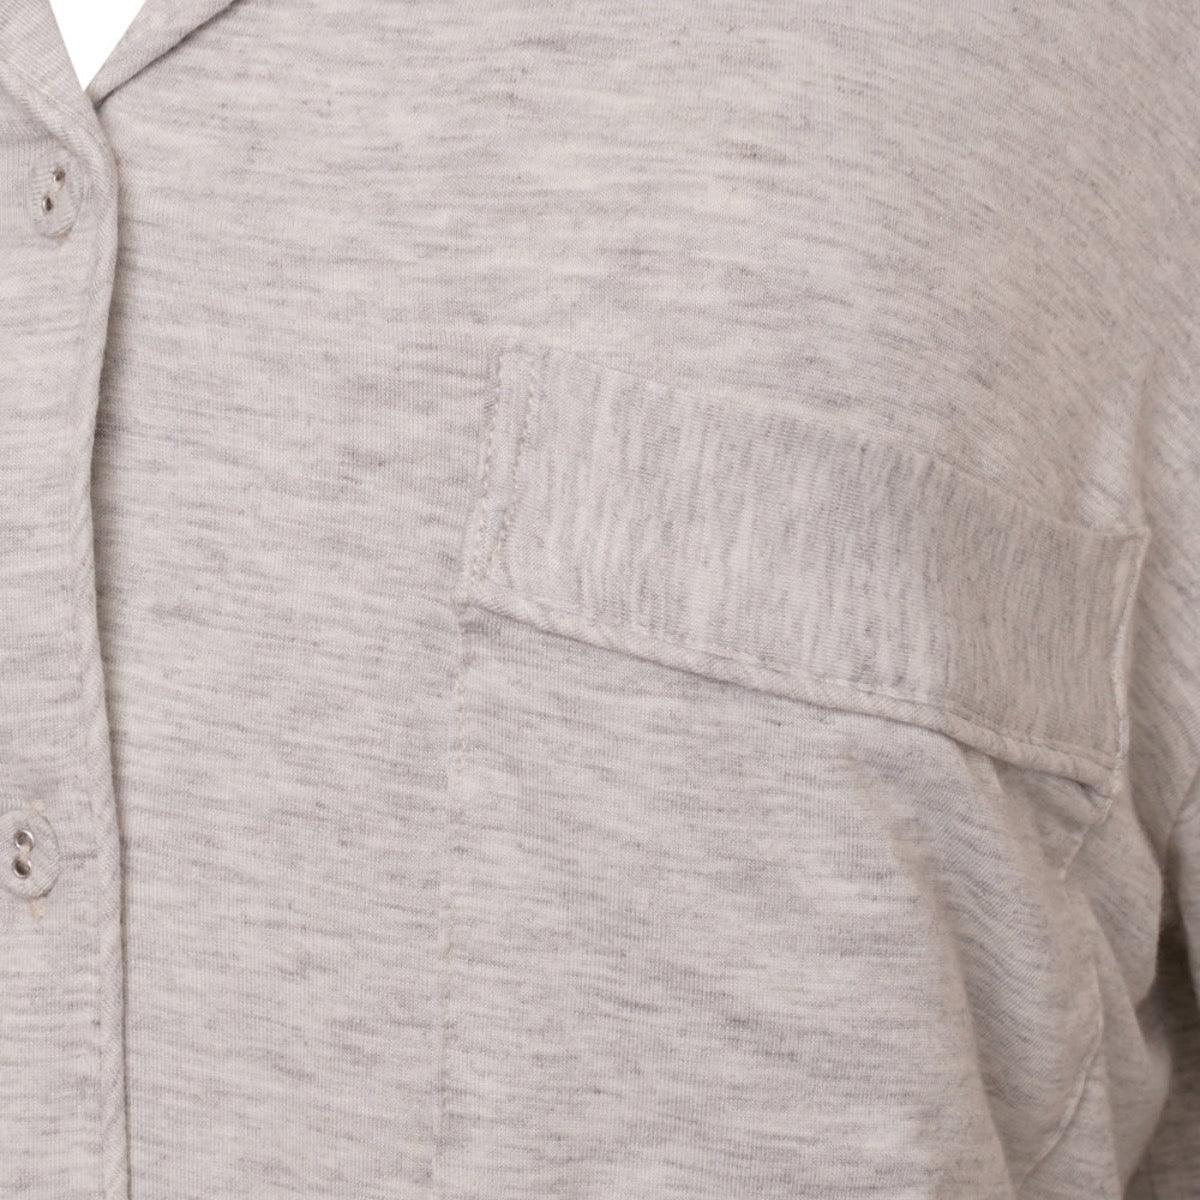 Rayon Stretch Pyjama Short Set - Marl Grey - The NAP Co.